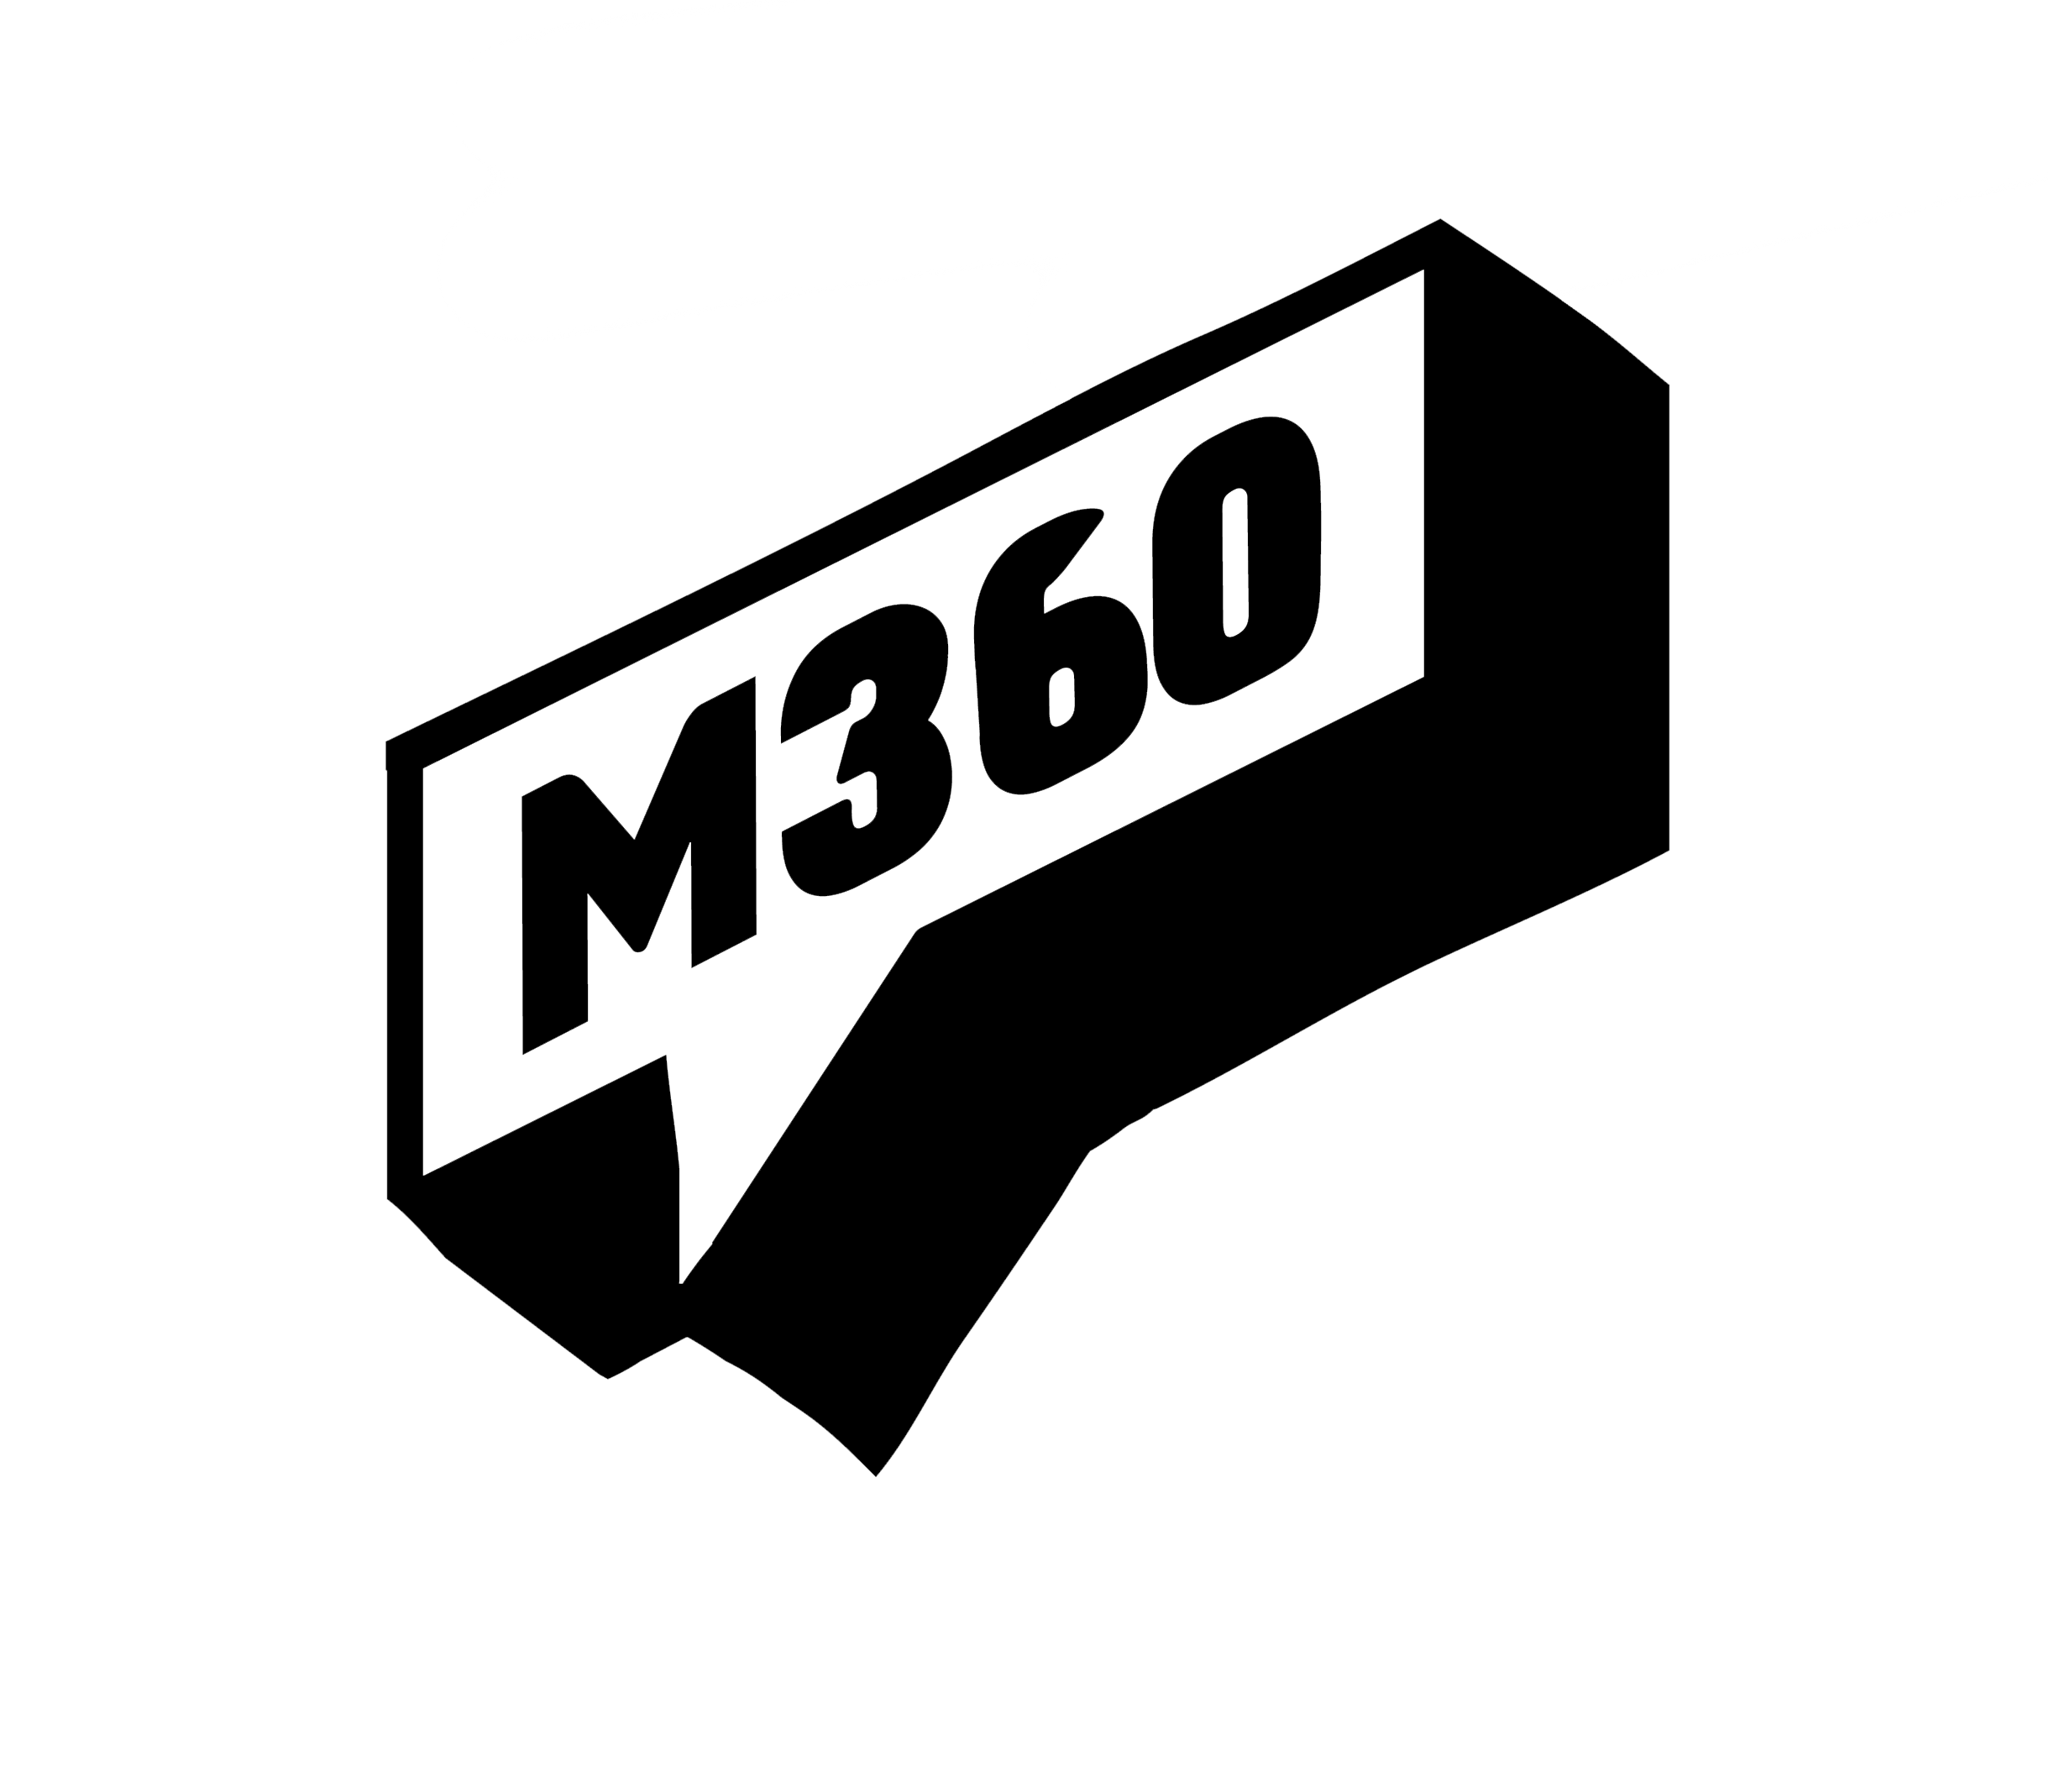   M360 Communications